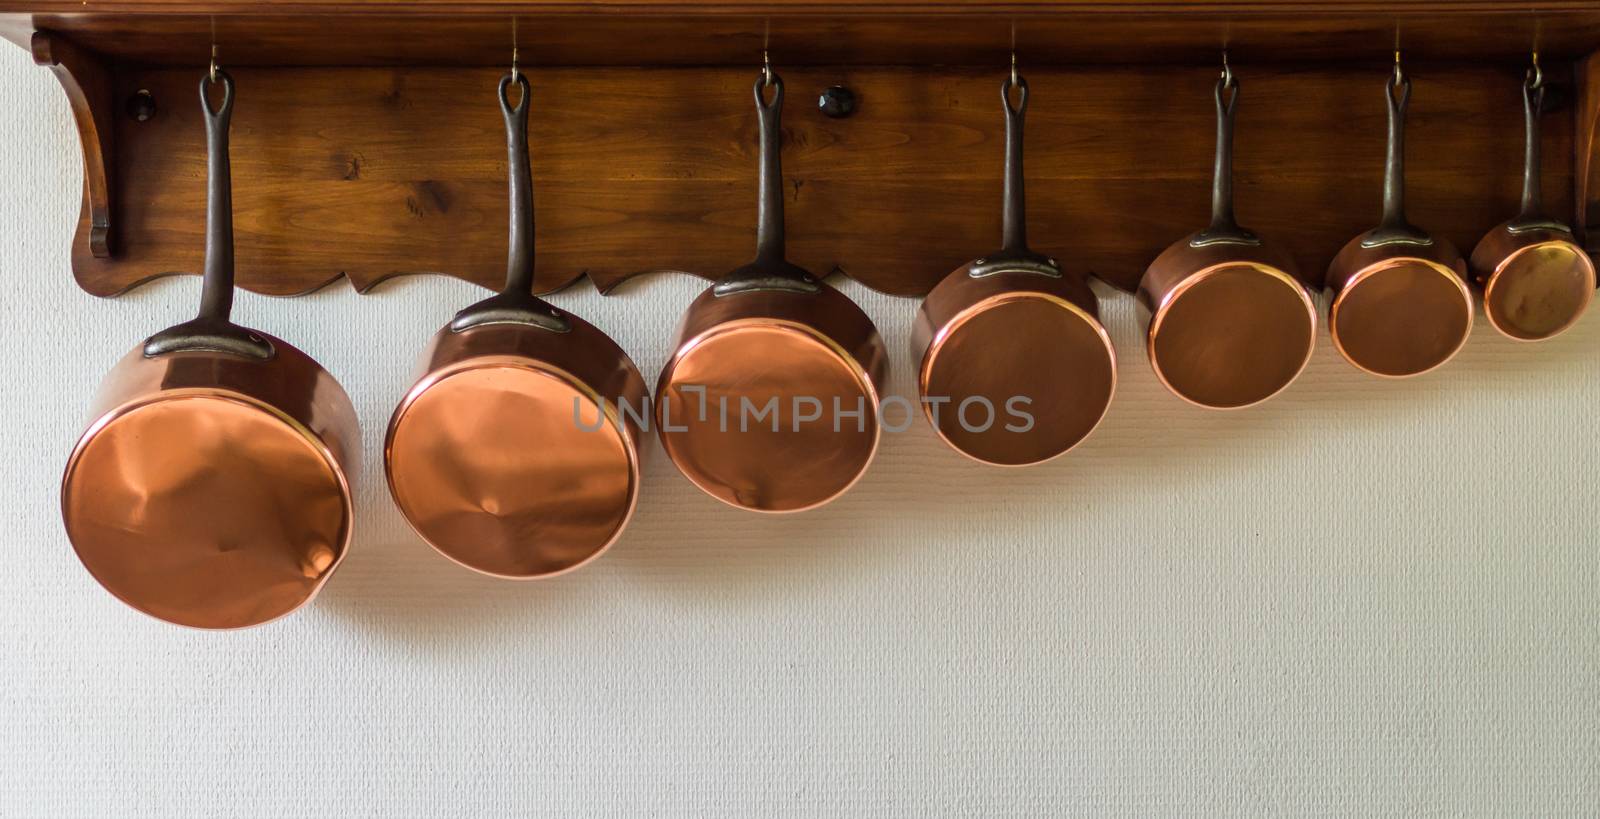 saucepans hanging in the kitchen by okskukuruza